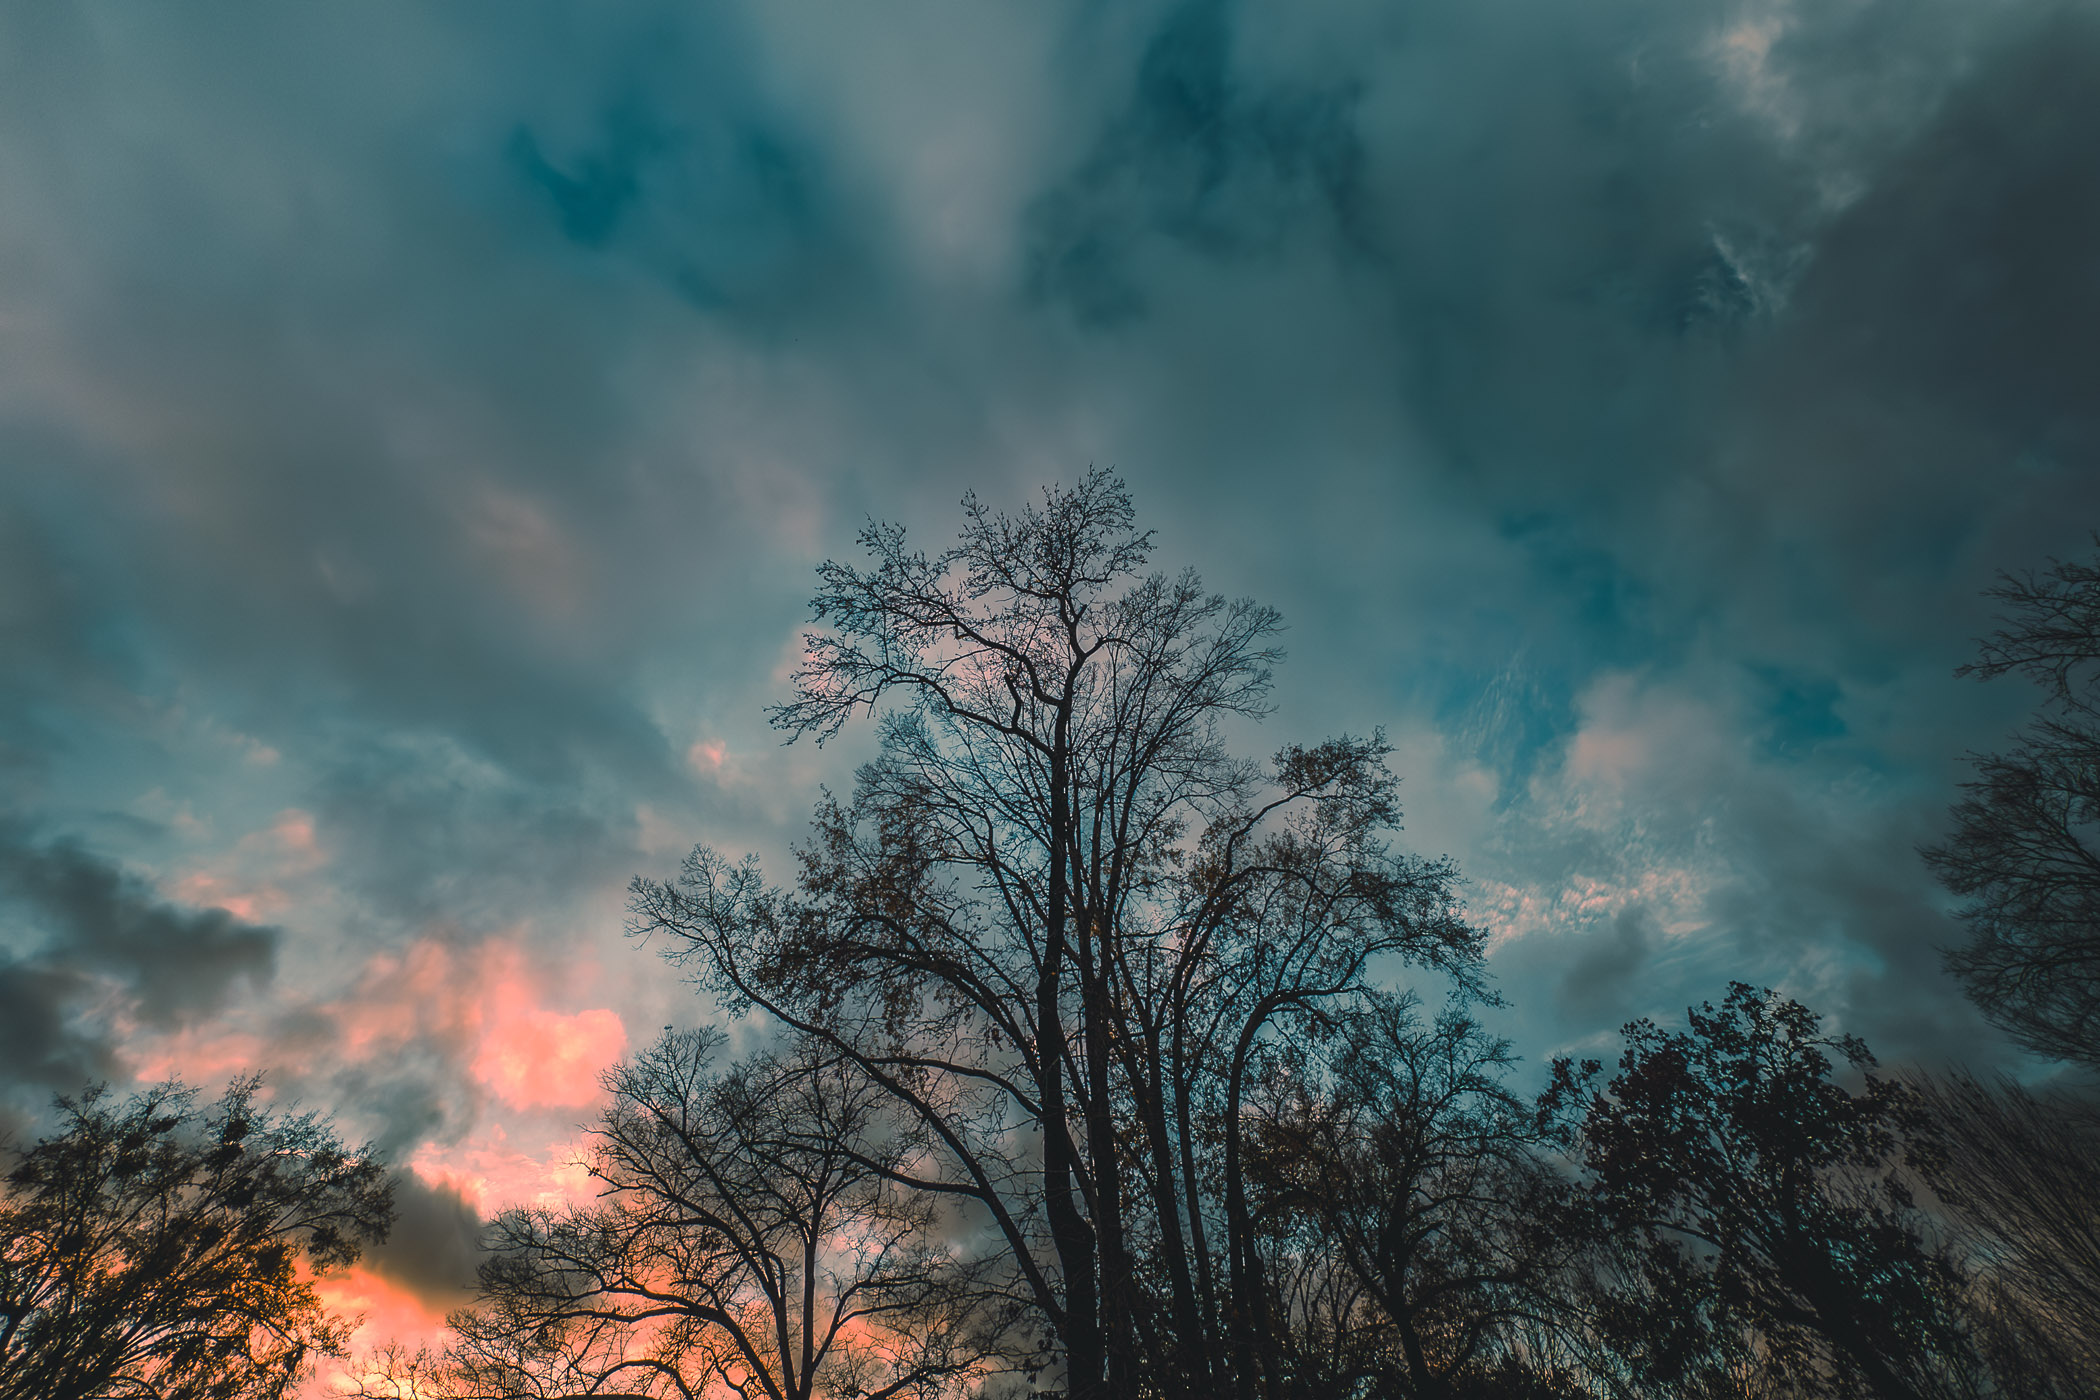 Trees reach into the evening sky over Tyler, Texas.